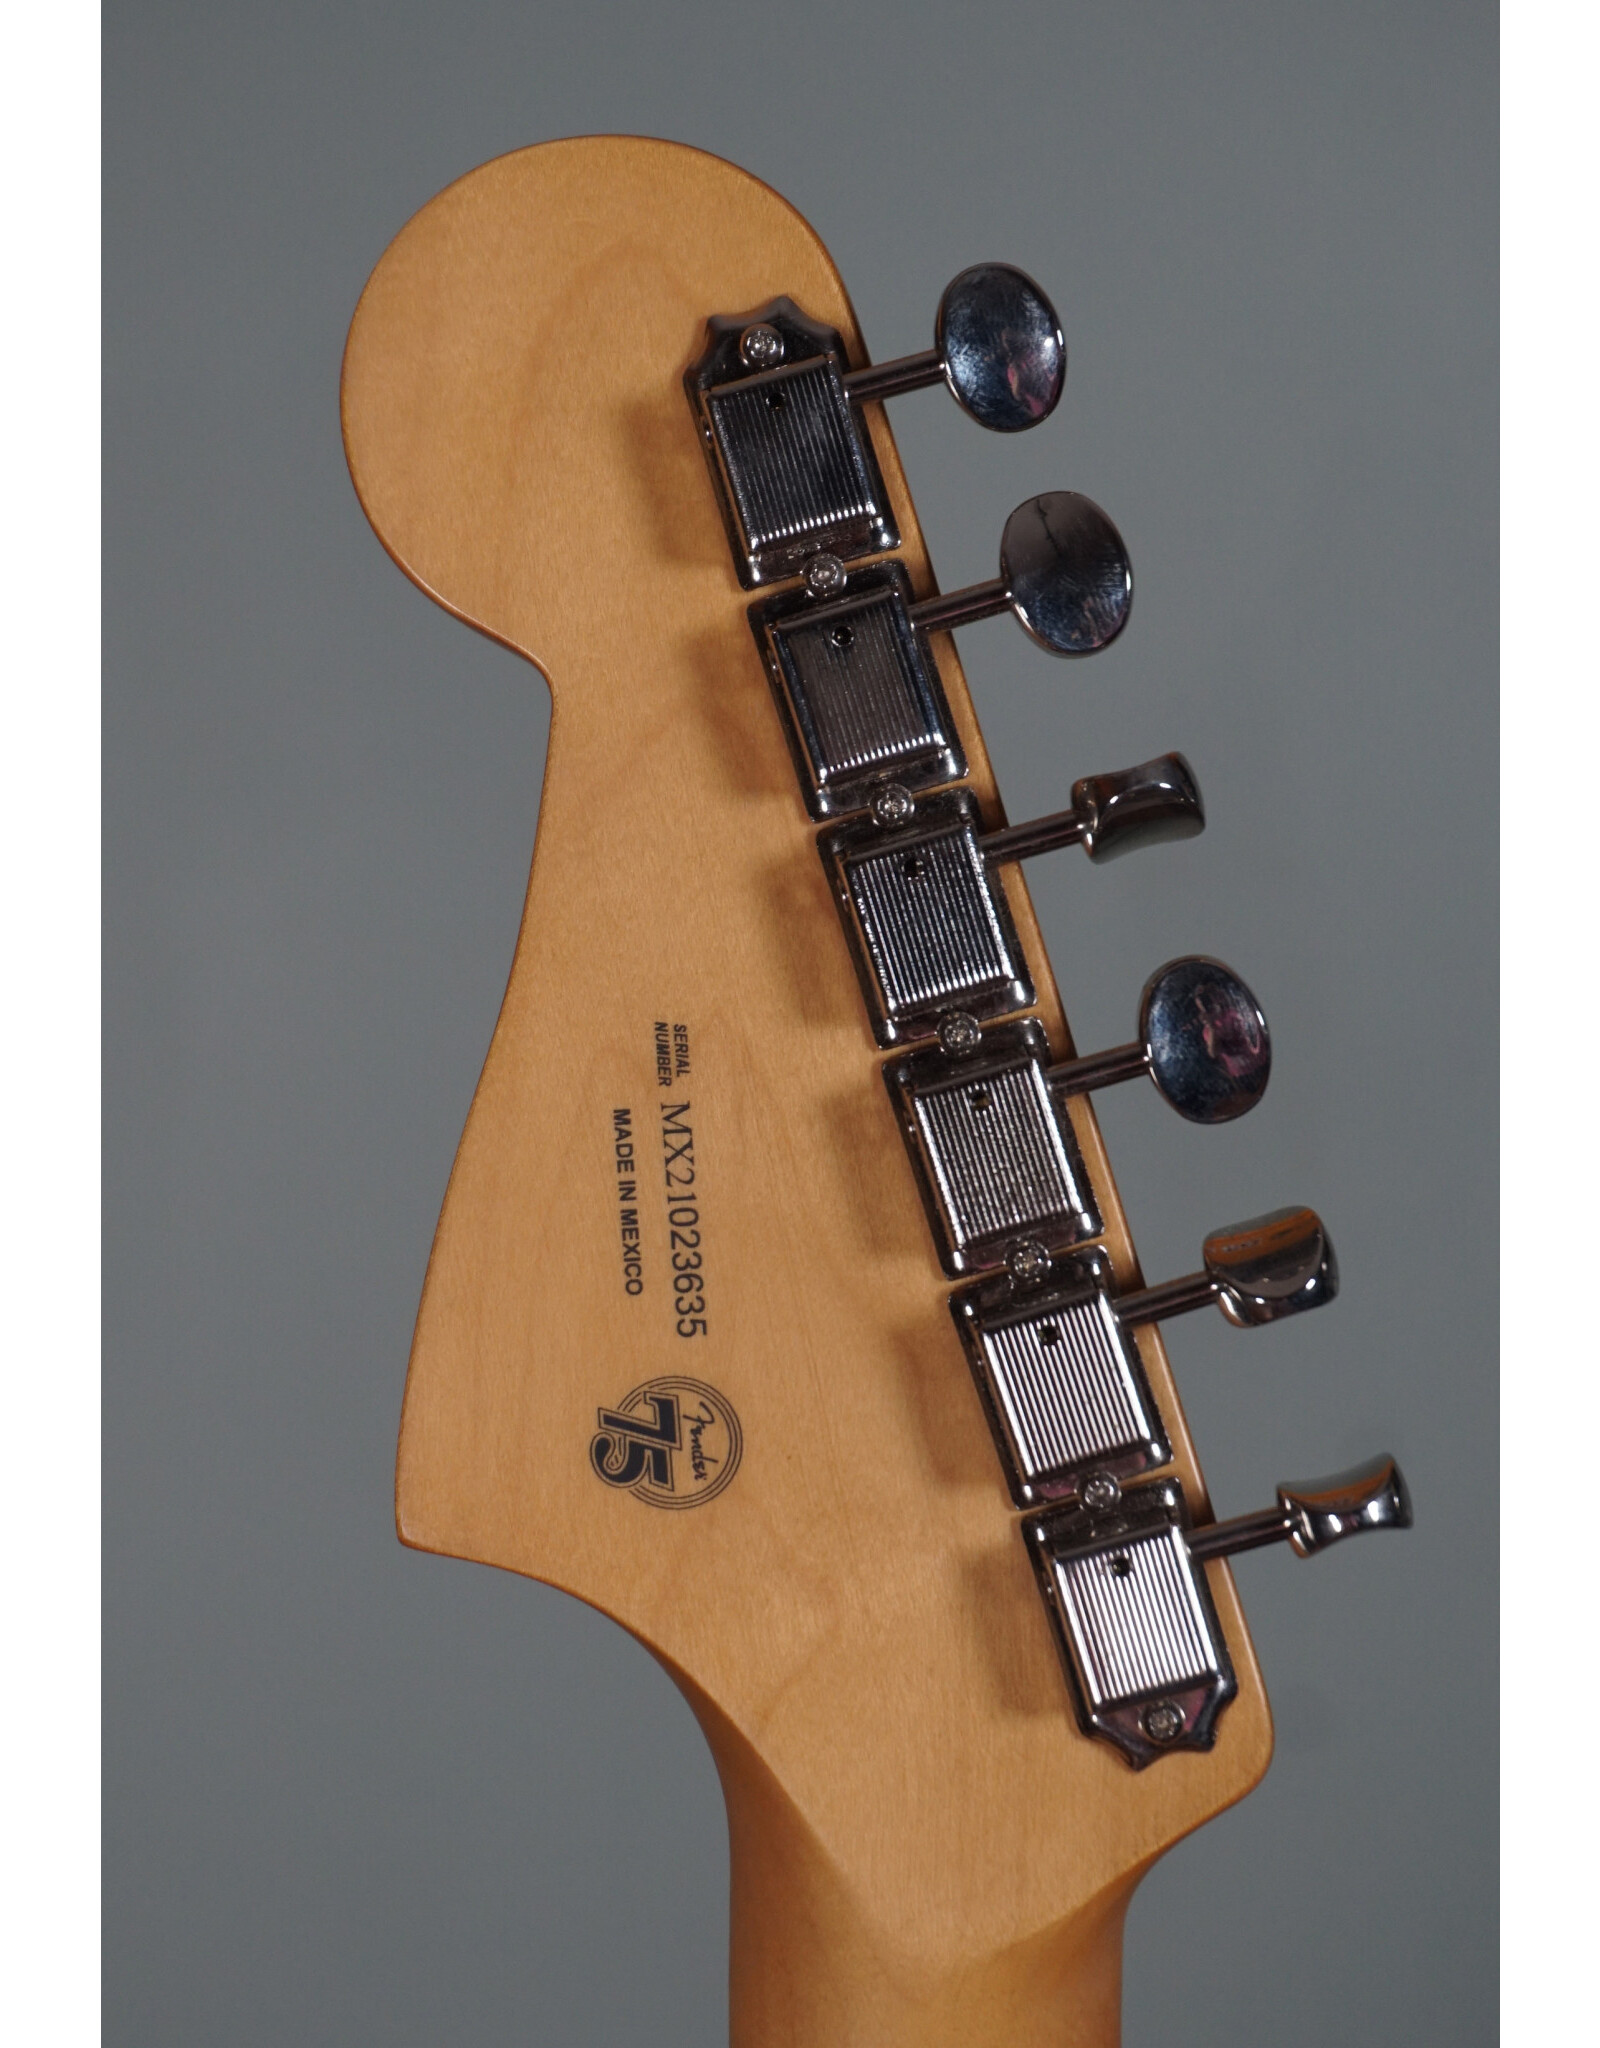 Fender Fender Noventa Jazzmaster, Fiesta Red, Maple fb, w/deluxe gig bag